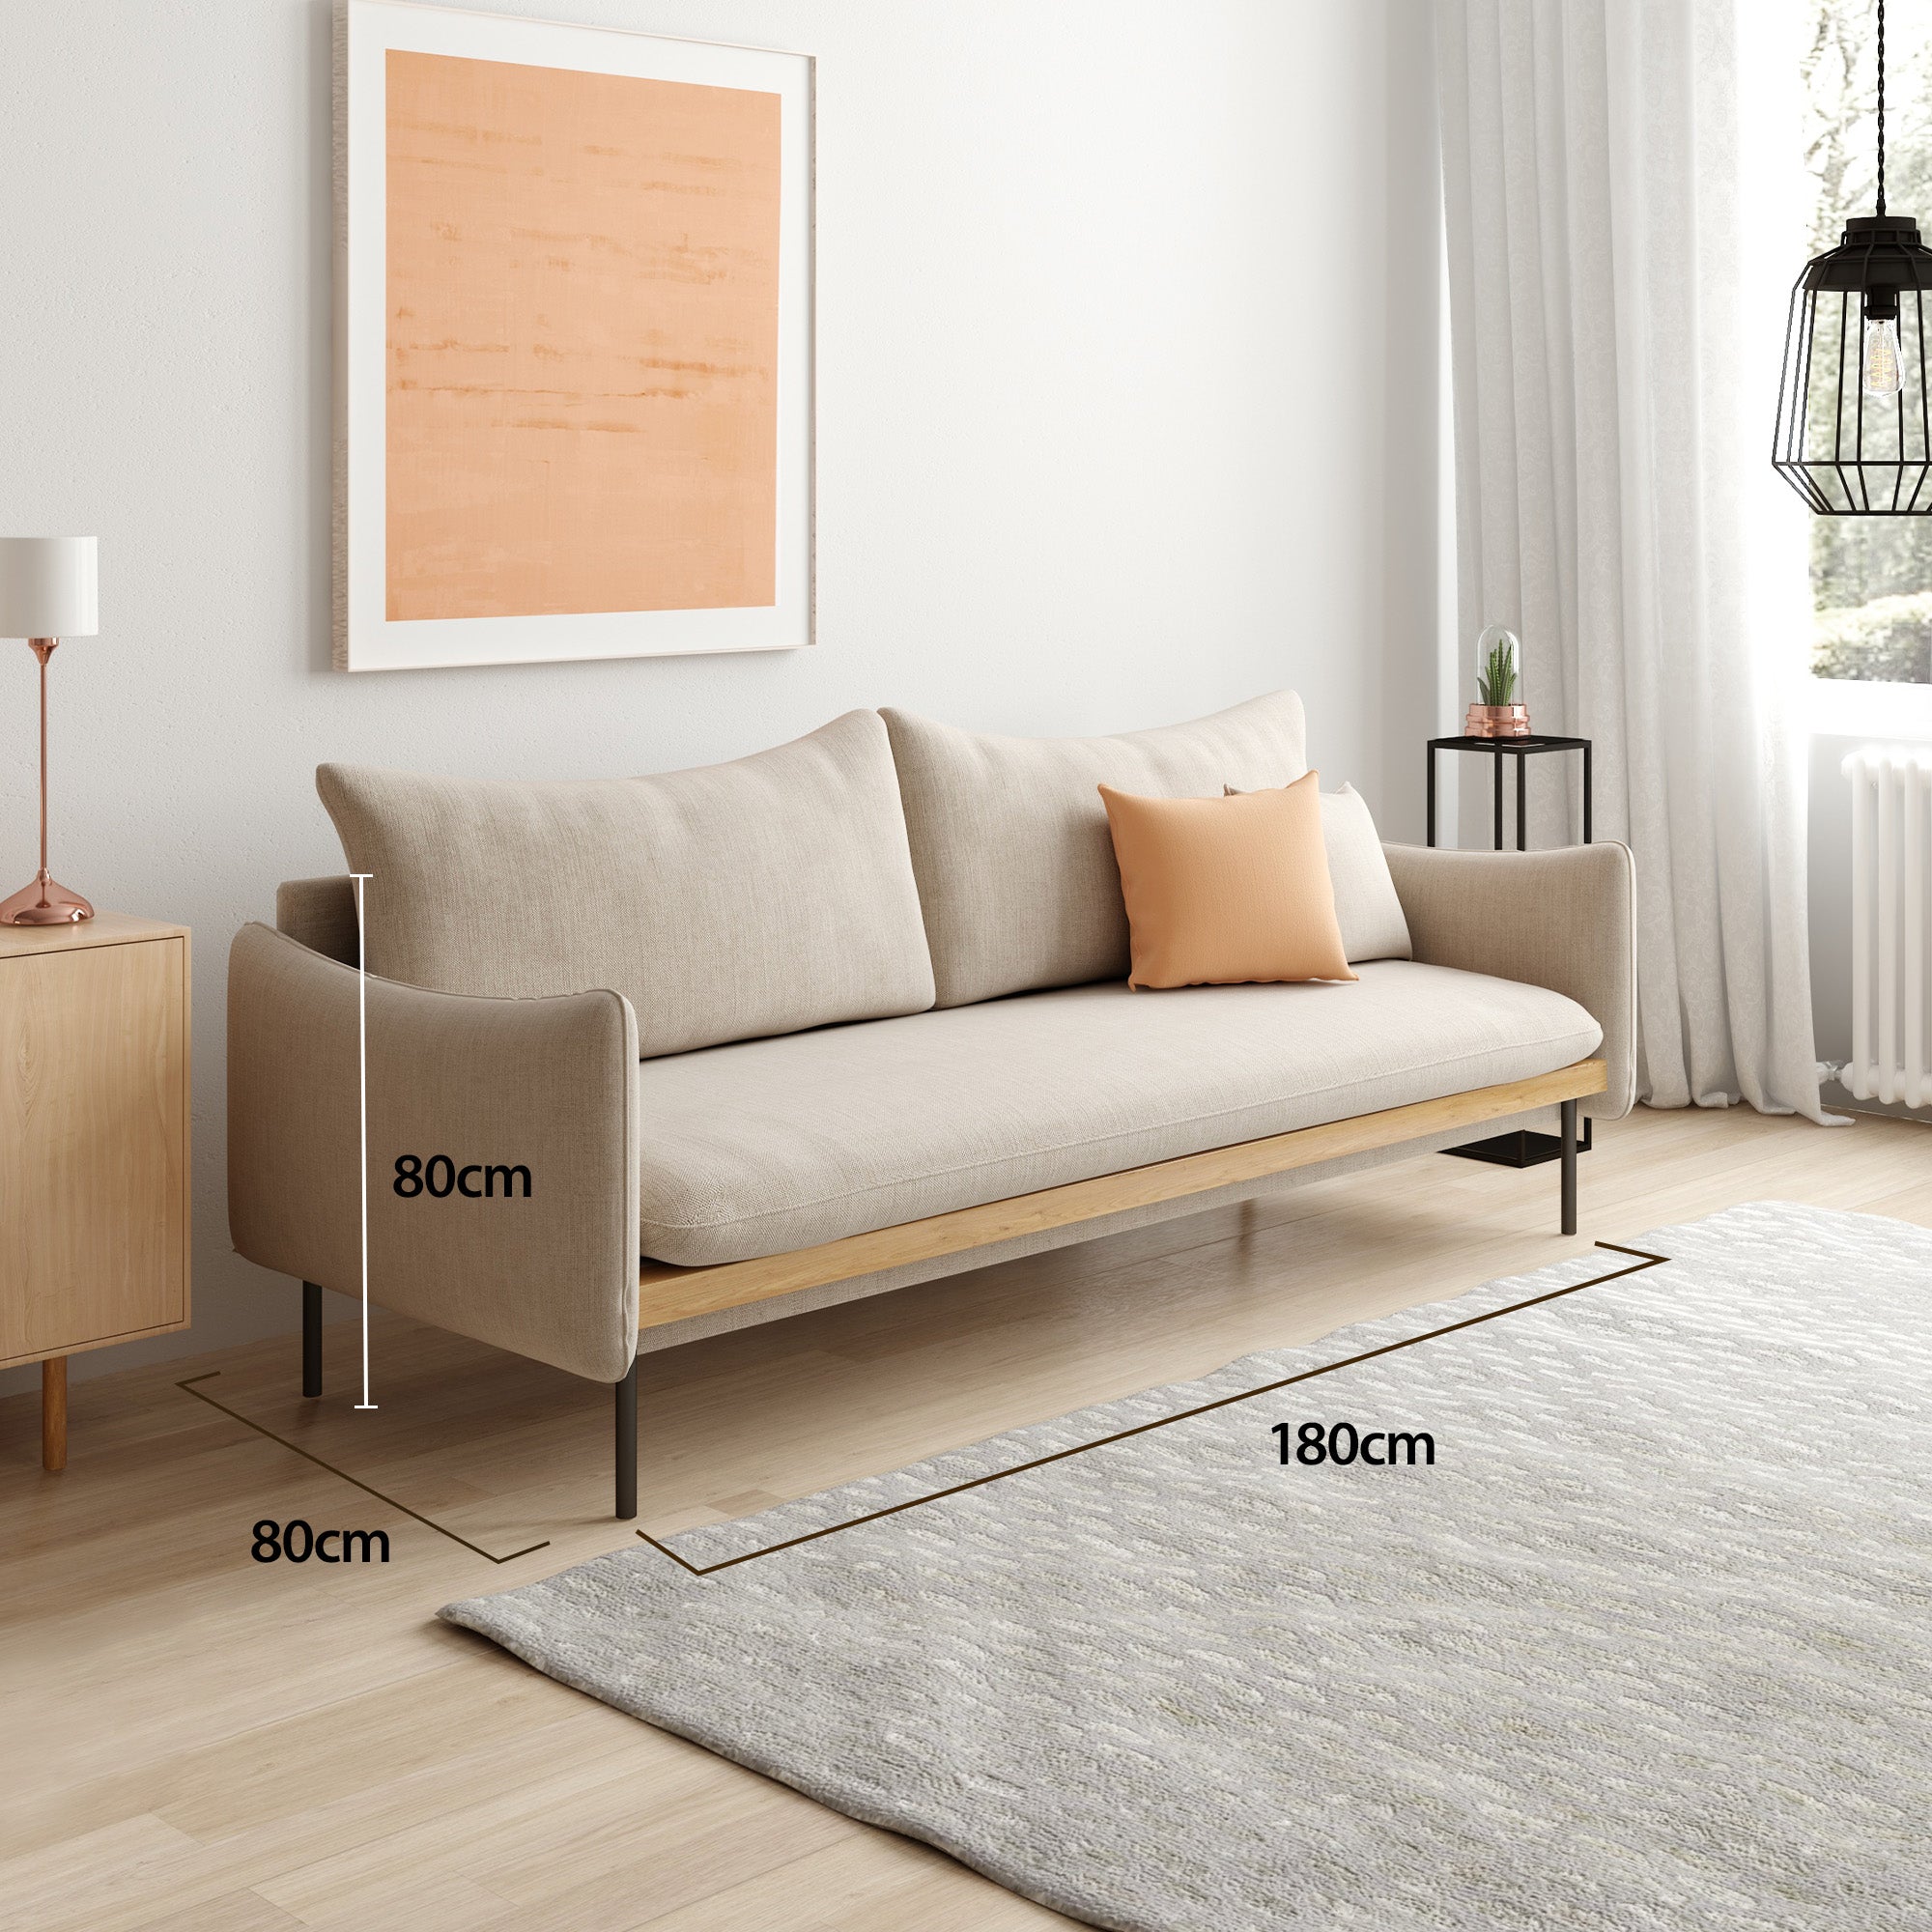 Vivaldi 3 Seater Linen Sofa